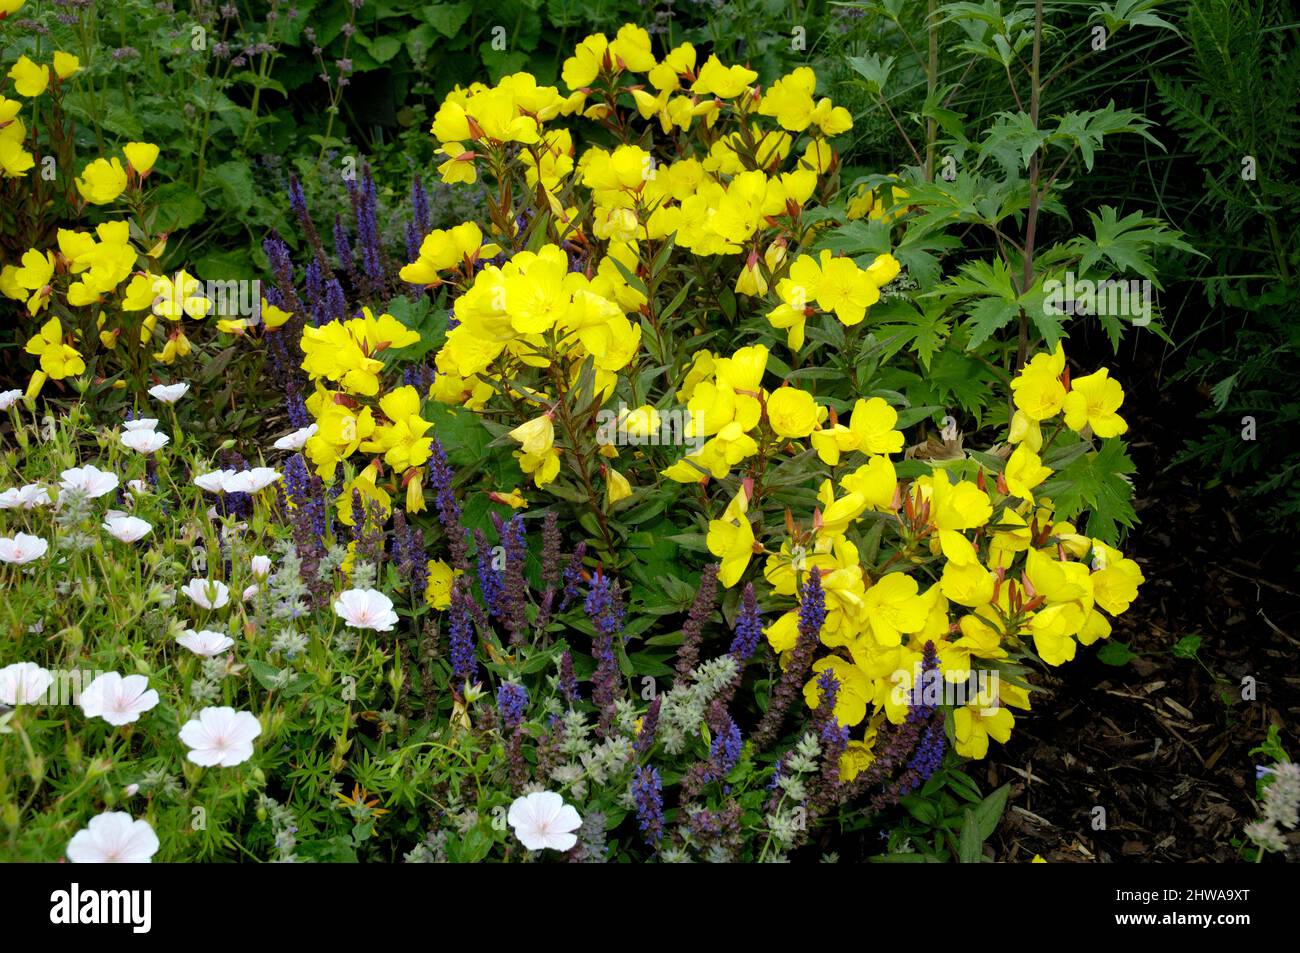 Sundrops, Narrow-leaved sundrops, Golden sundrops, Narrowleaf evening-primrose, Shrubby sundrop (Oenothera fruticosa, Oenothera tetragona), blooming Stock Photo